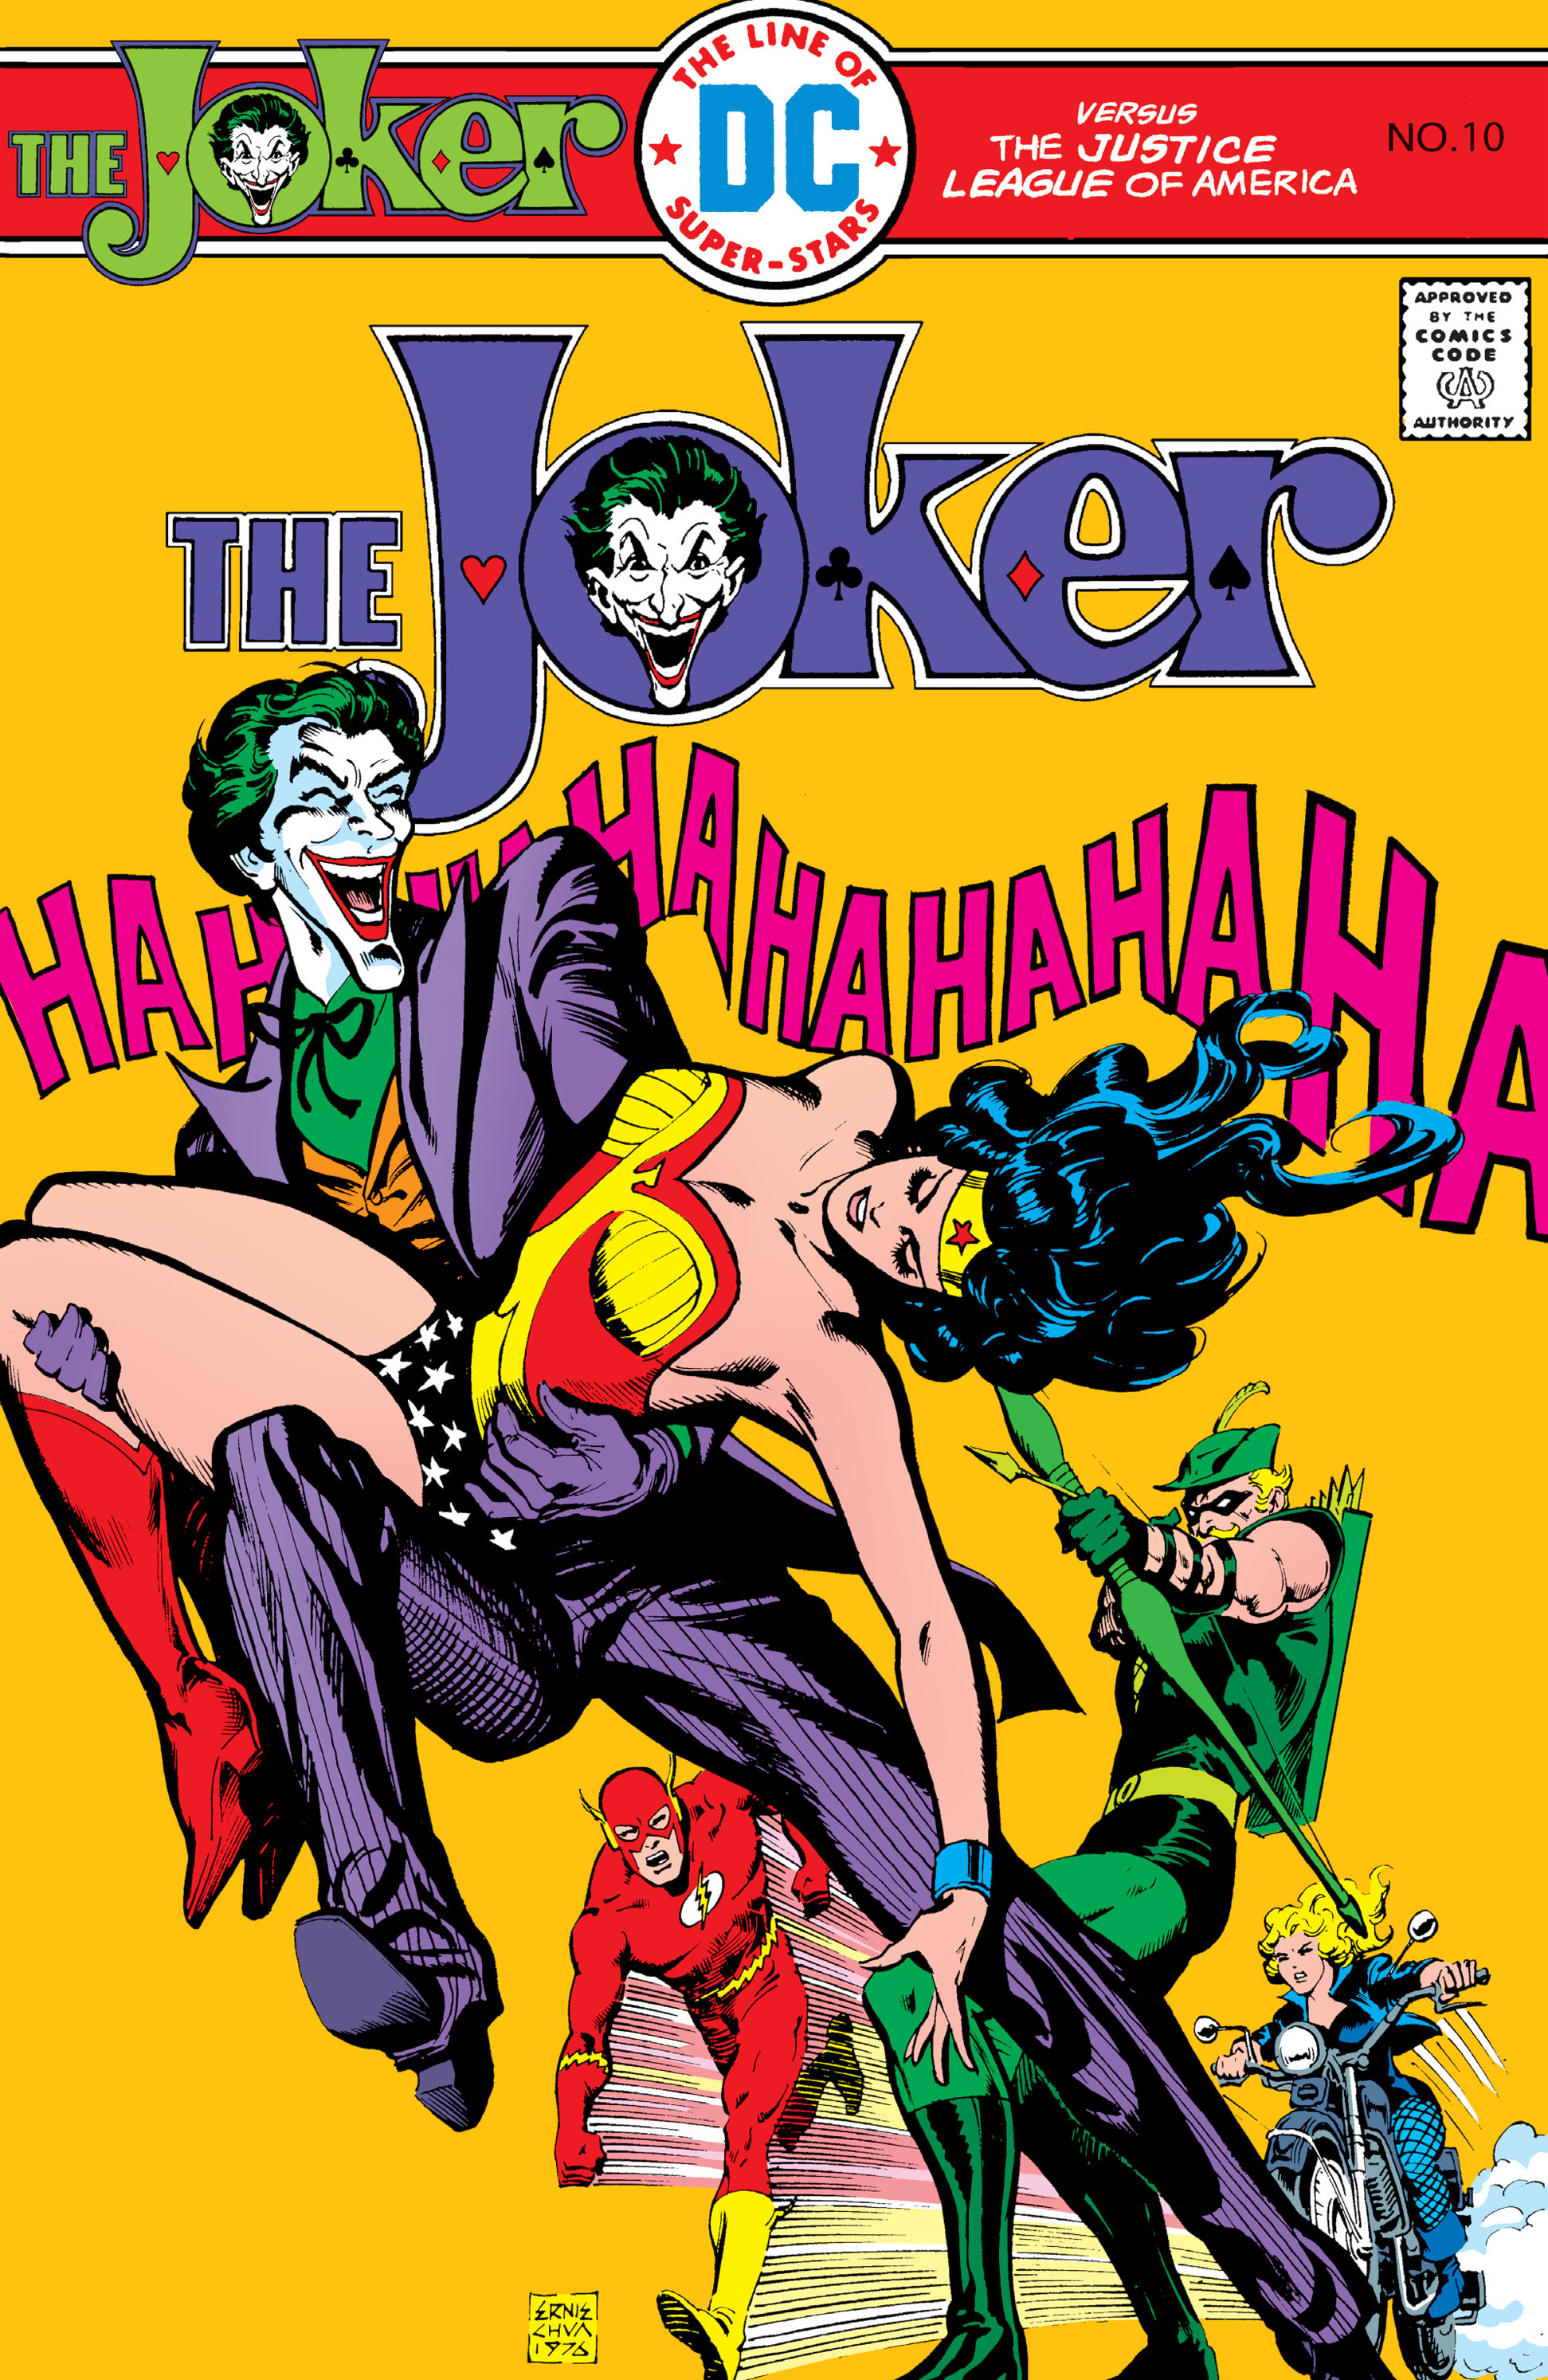 Read online The Joker comic -  Issue #10 - 1